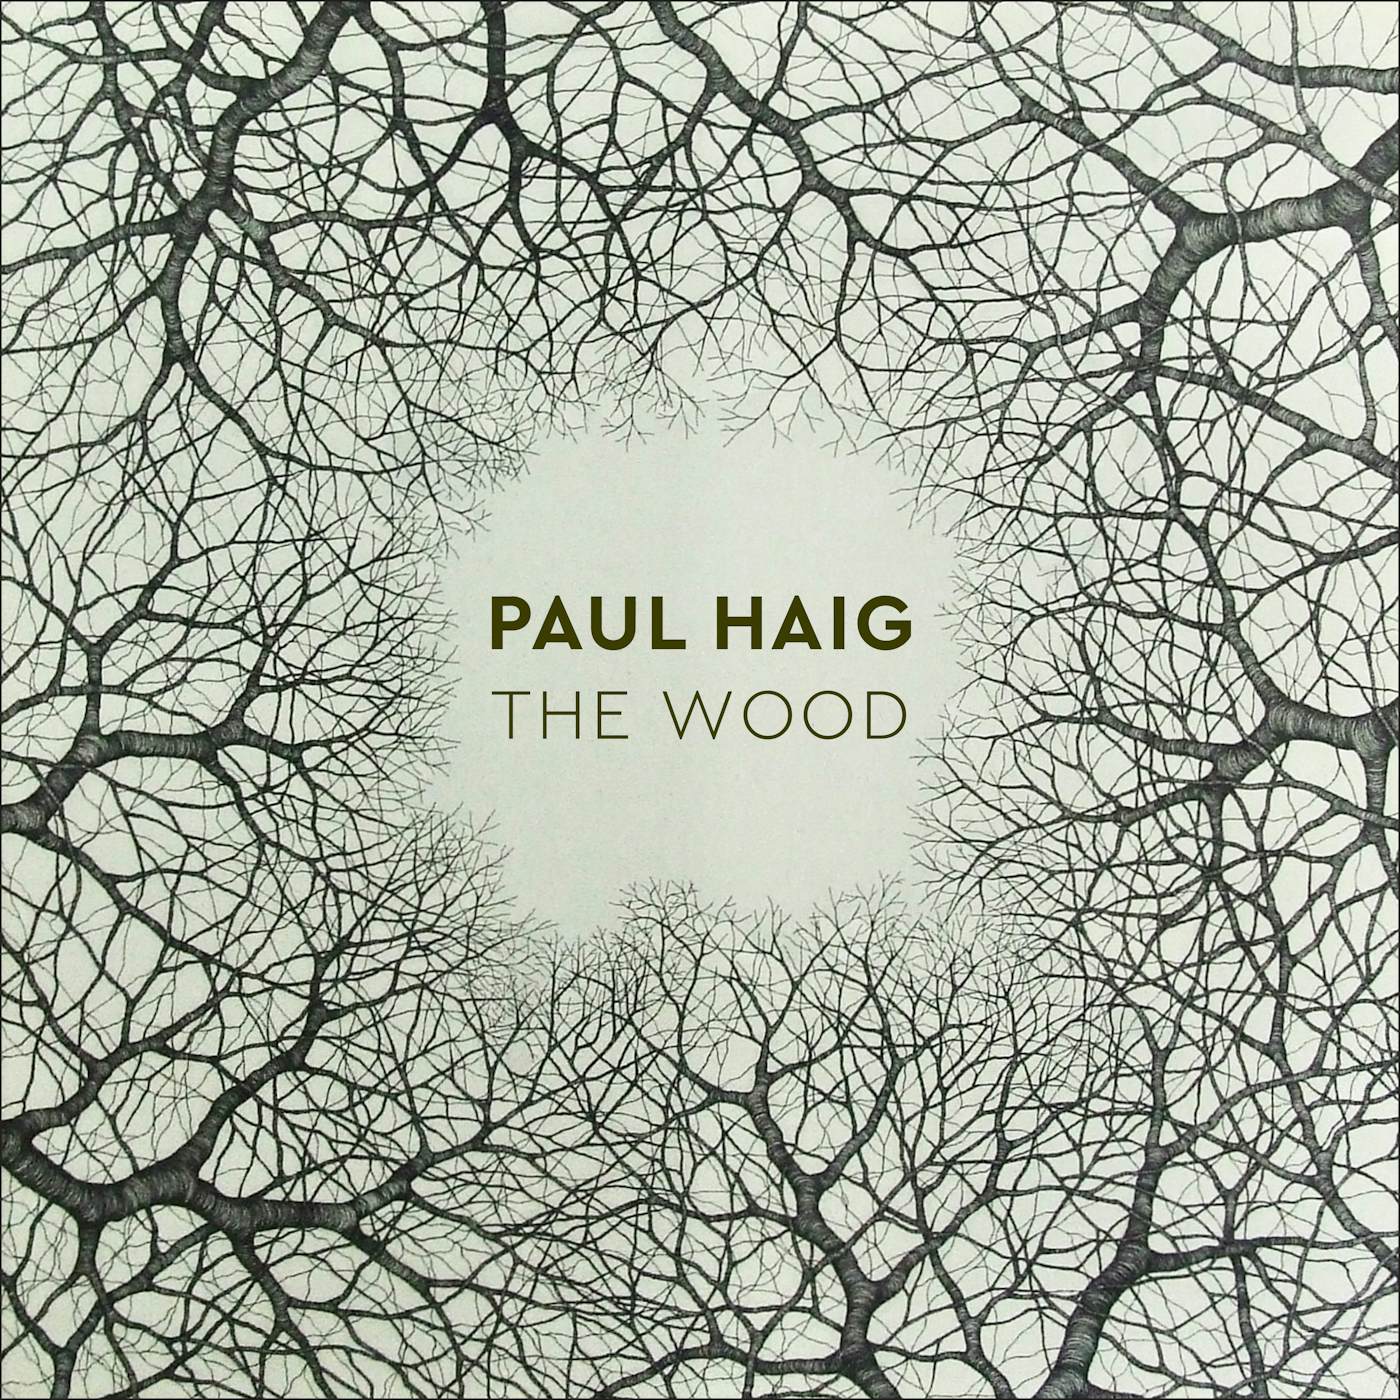 Paul Haig The Wood Vinyl Record